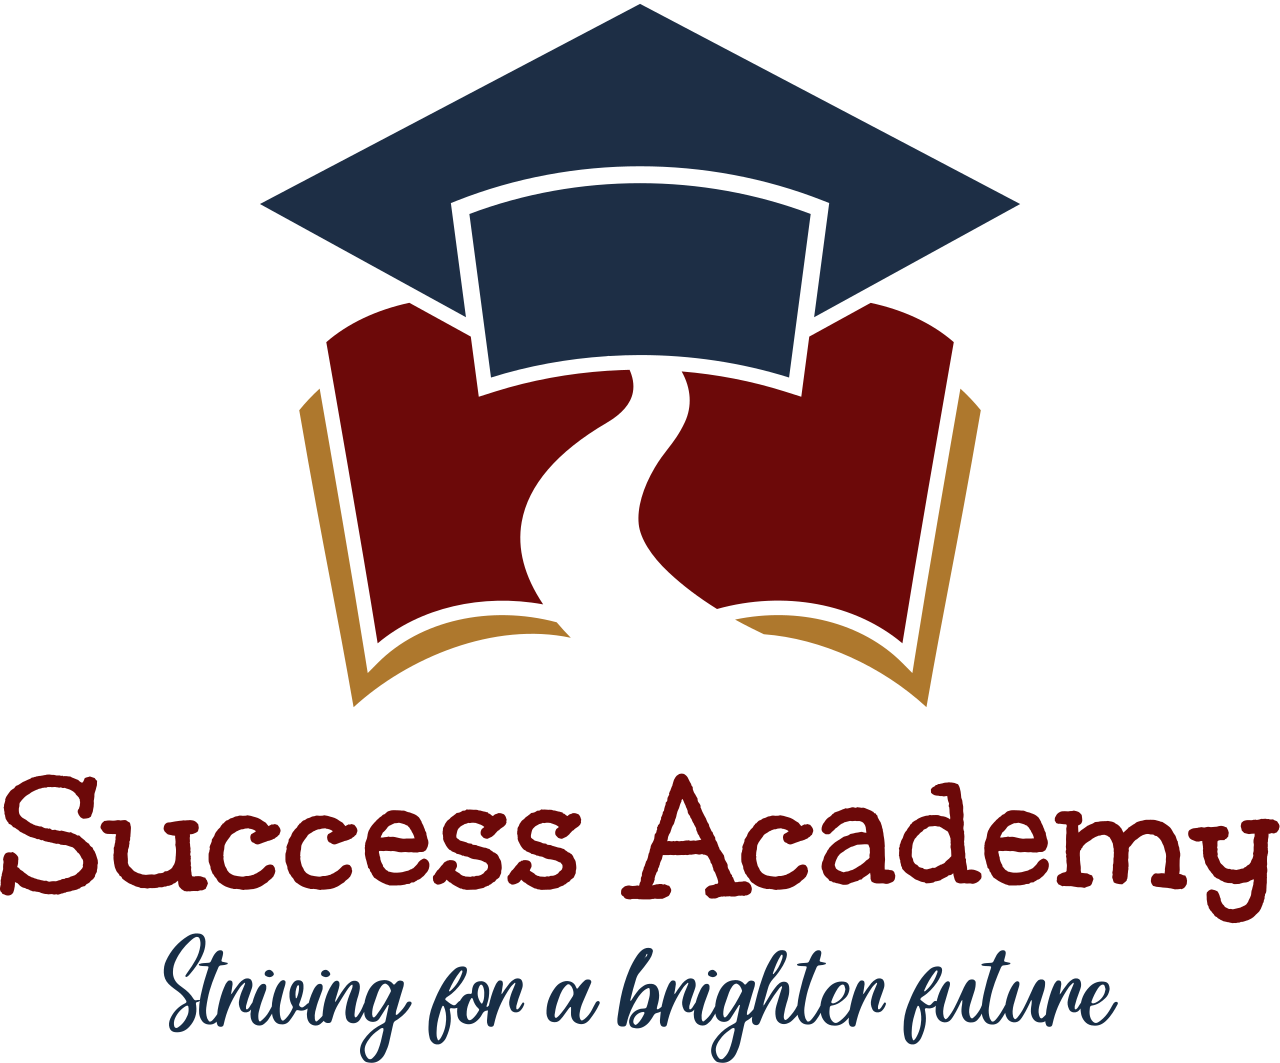 Success Academy's logo